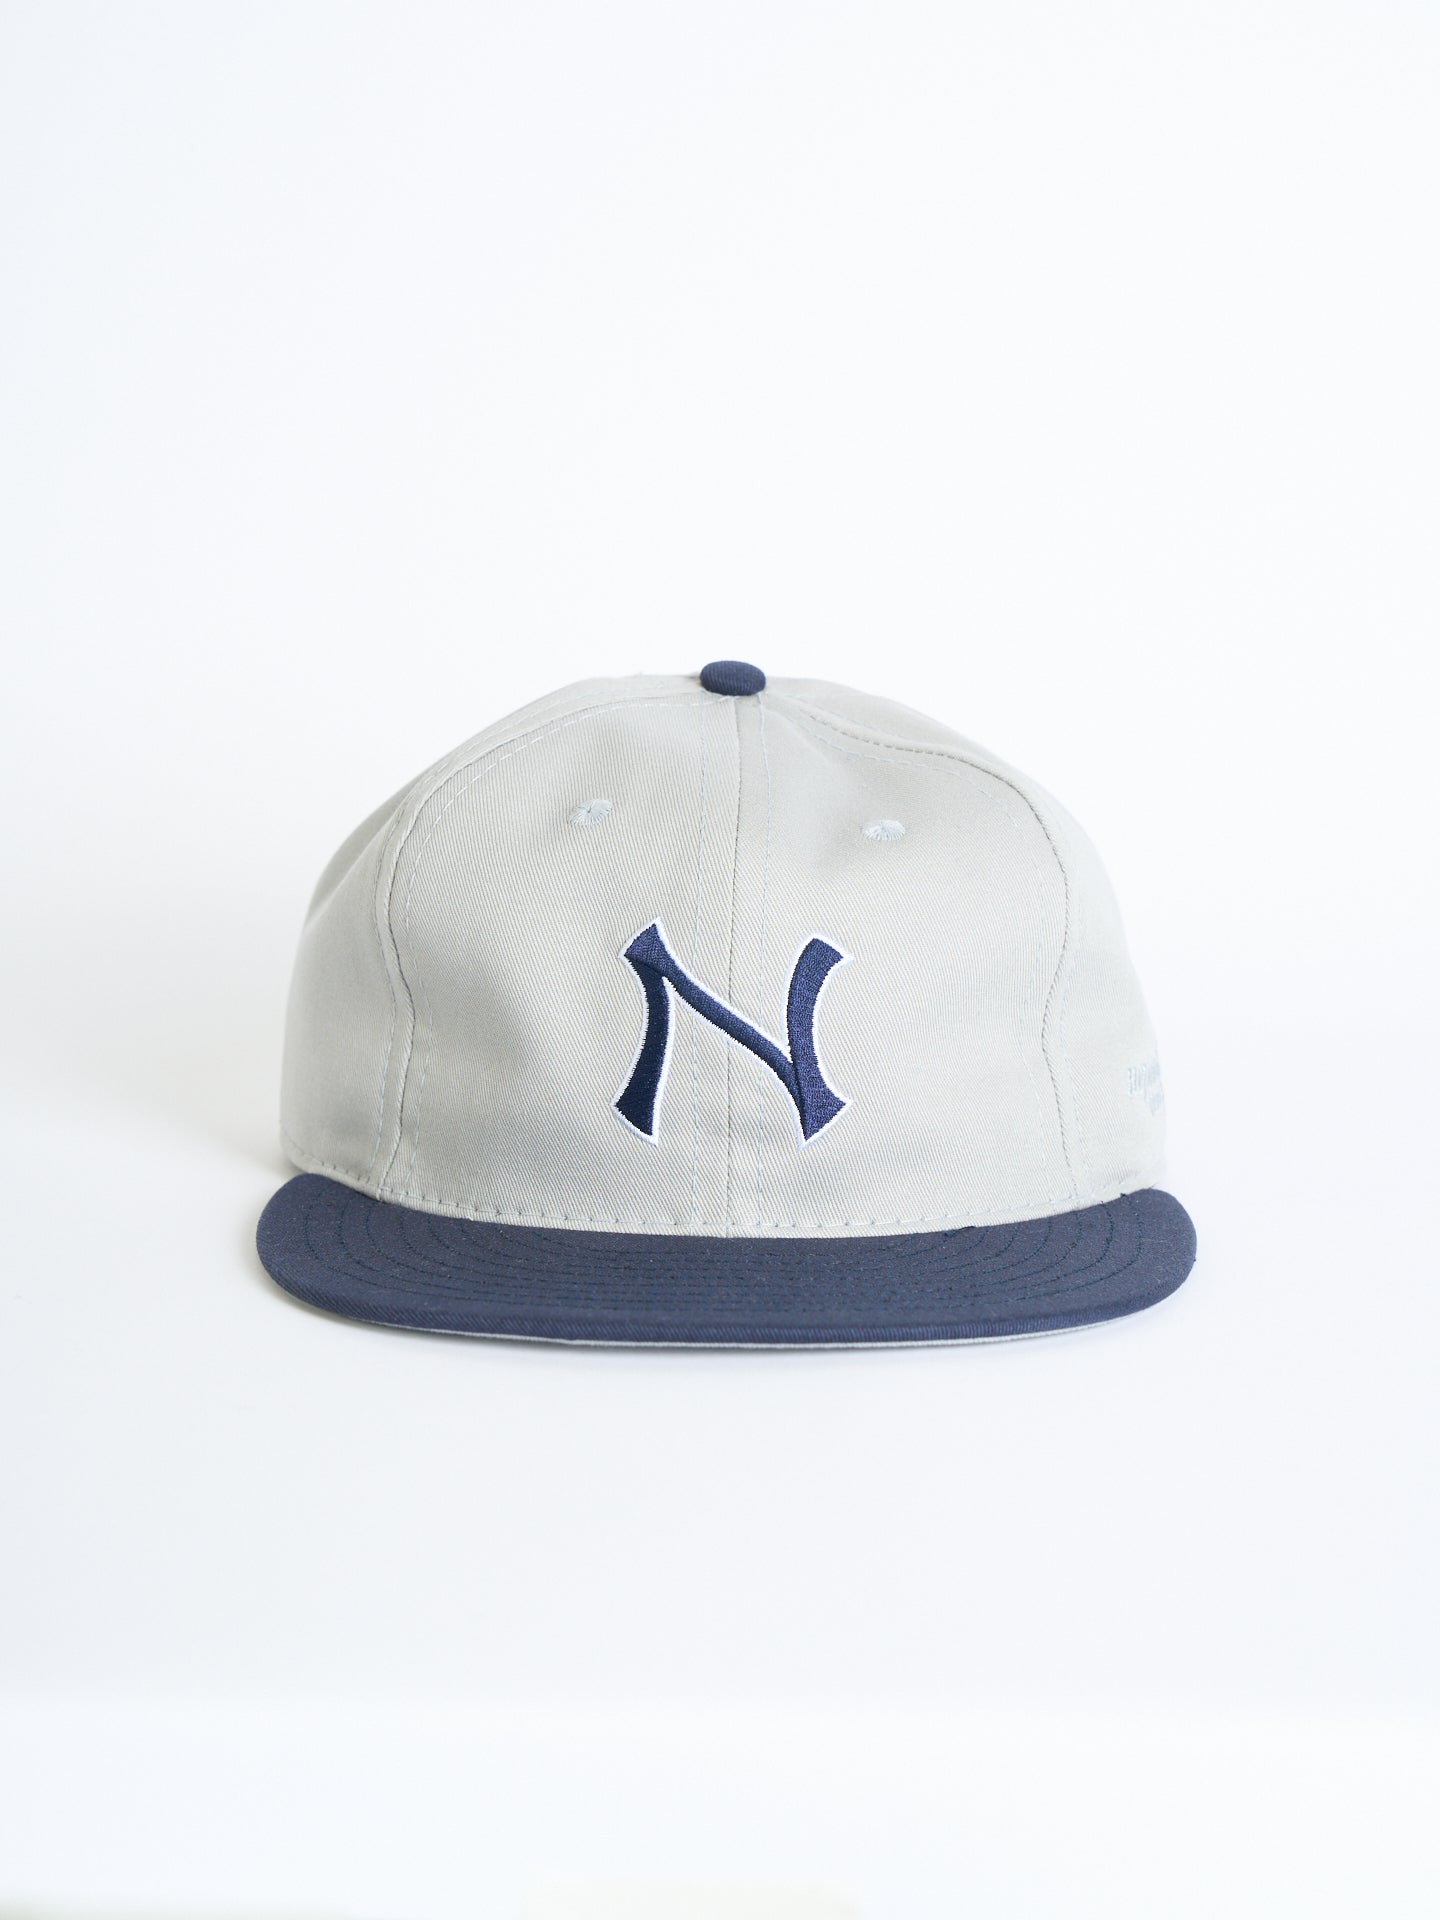 NNY x Ebbets Field Flannels - Bronx Snapback - Grey/Navy - Cotton